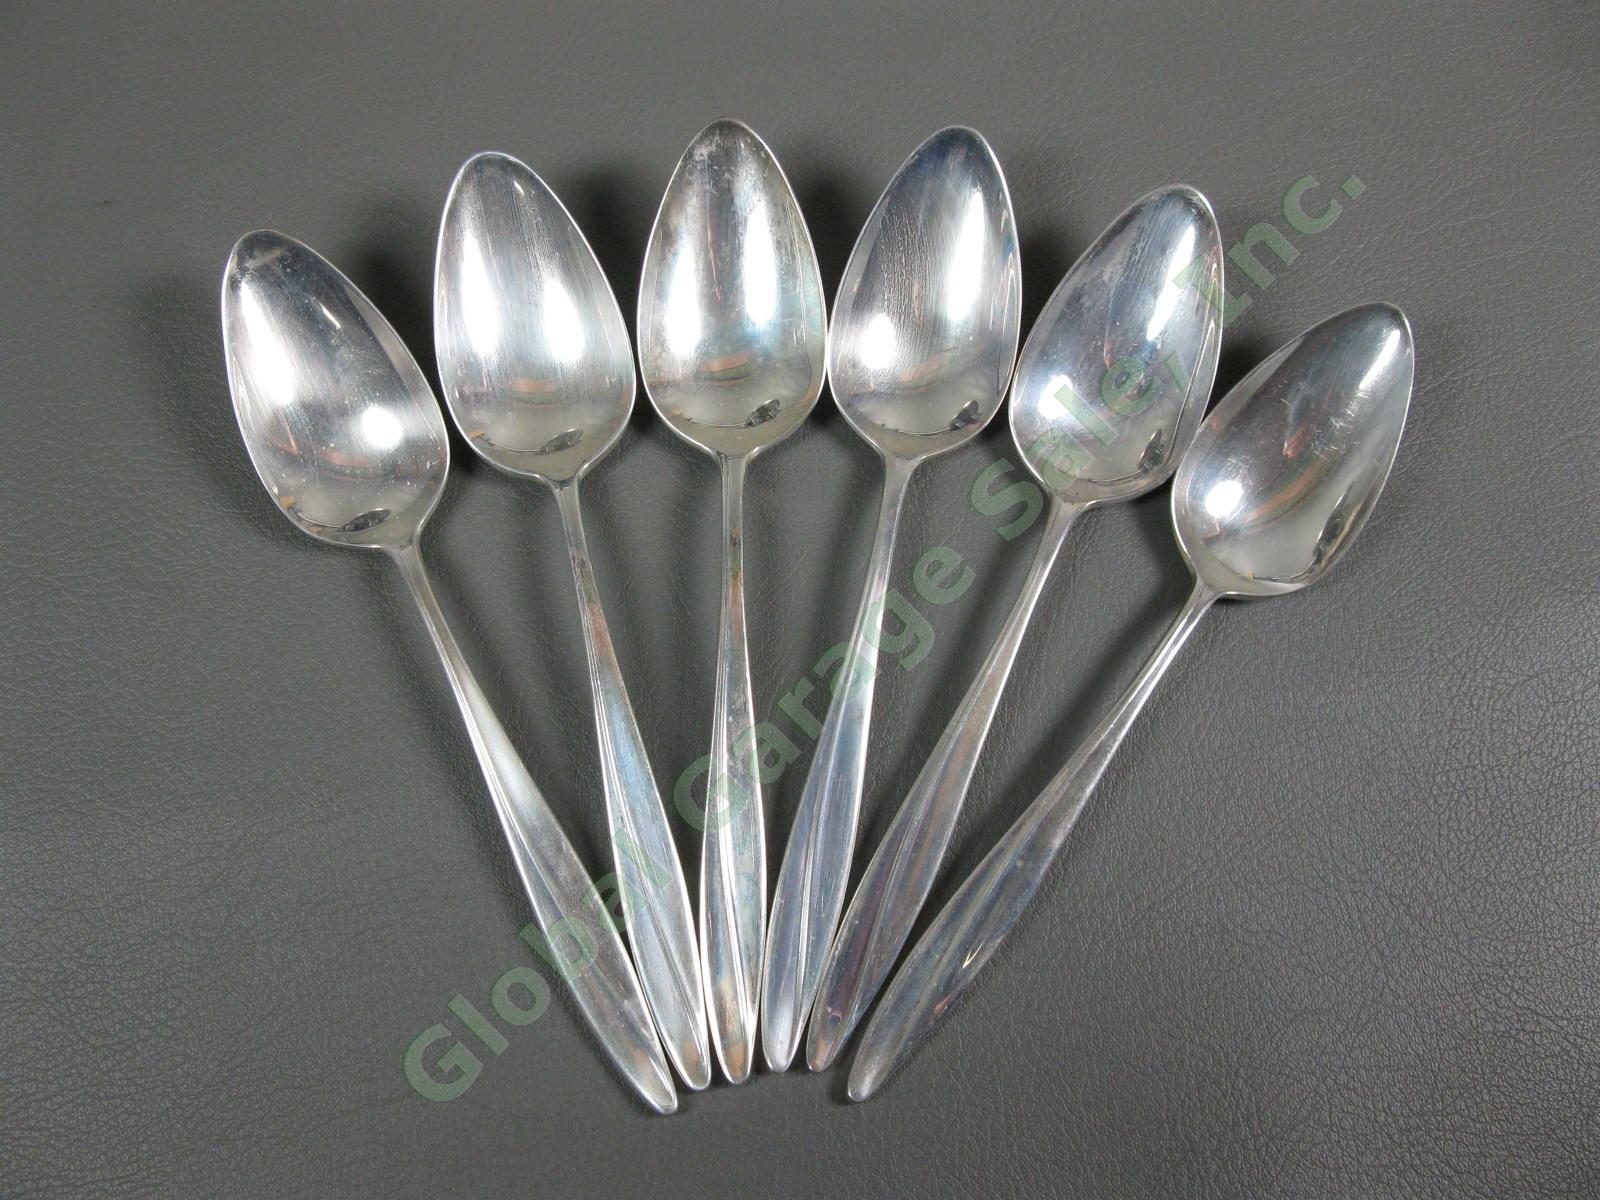 6 Gorham Firelight Sterling Silver 7 1/8" Desert Oval Soup Spoon Set 278g Grams